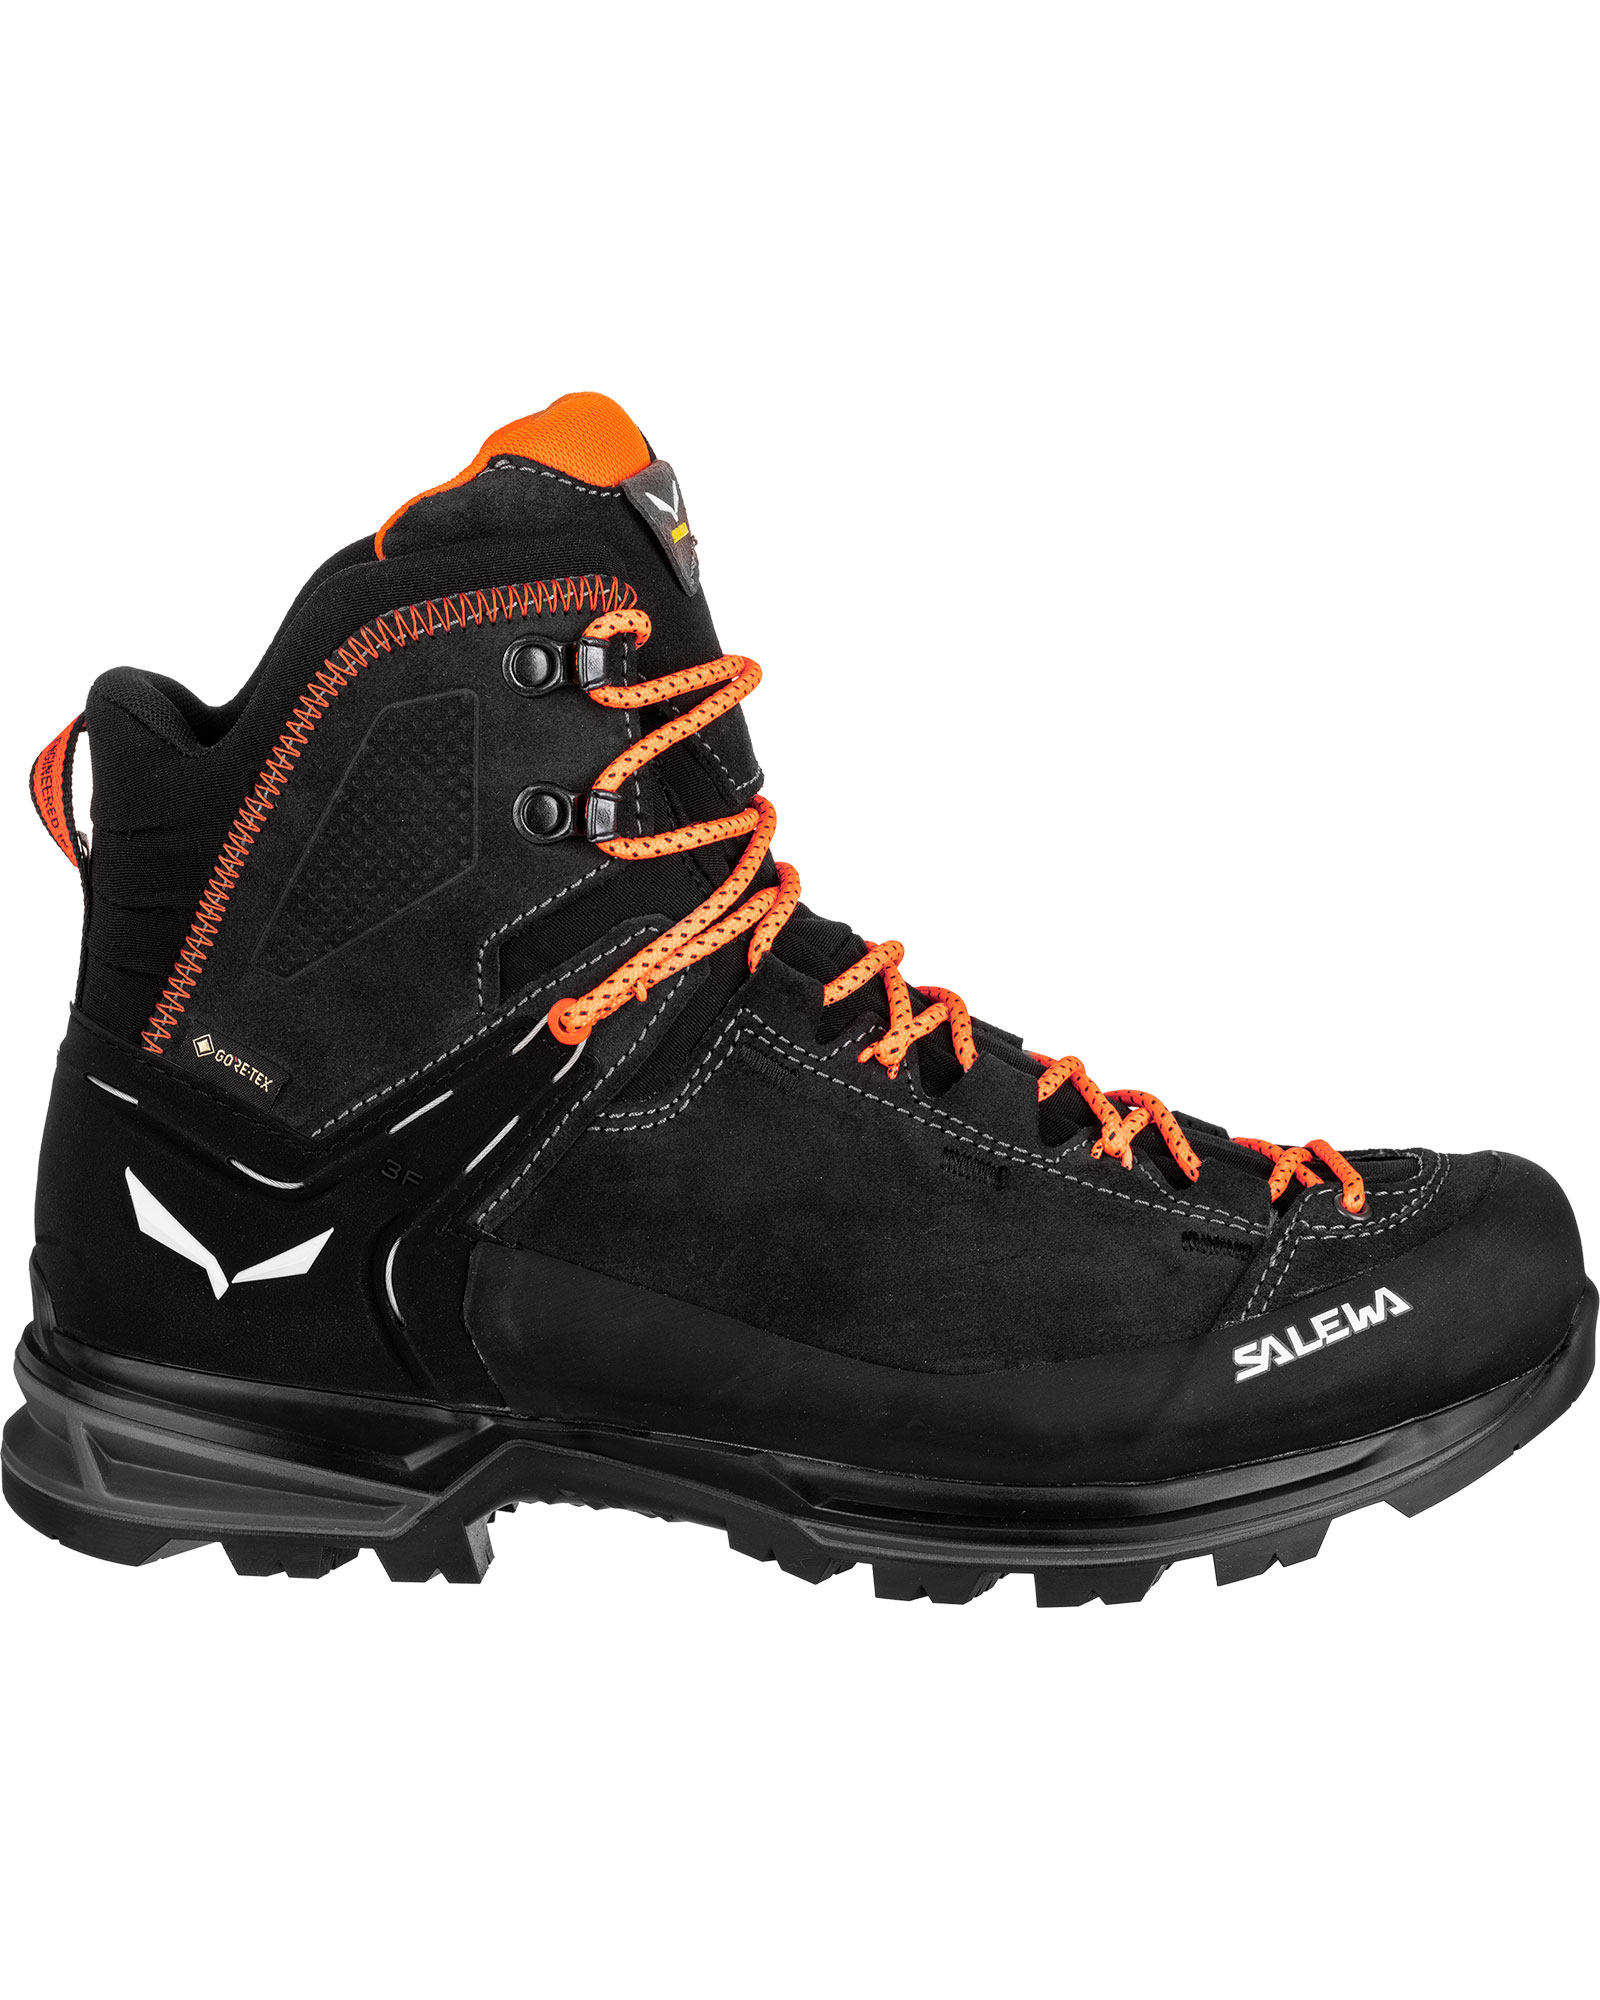 Salewa Mountain Trainer 2 Mid GORE TEX Men’s Boots - Onyx UK 10